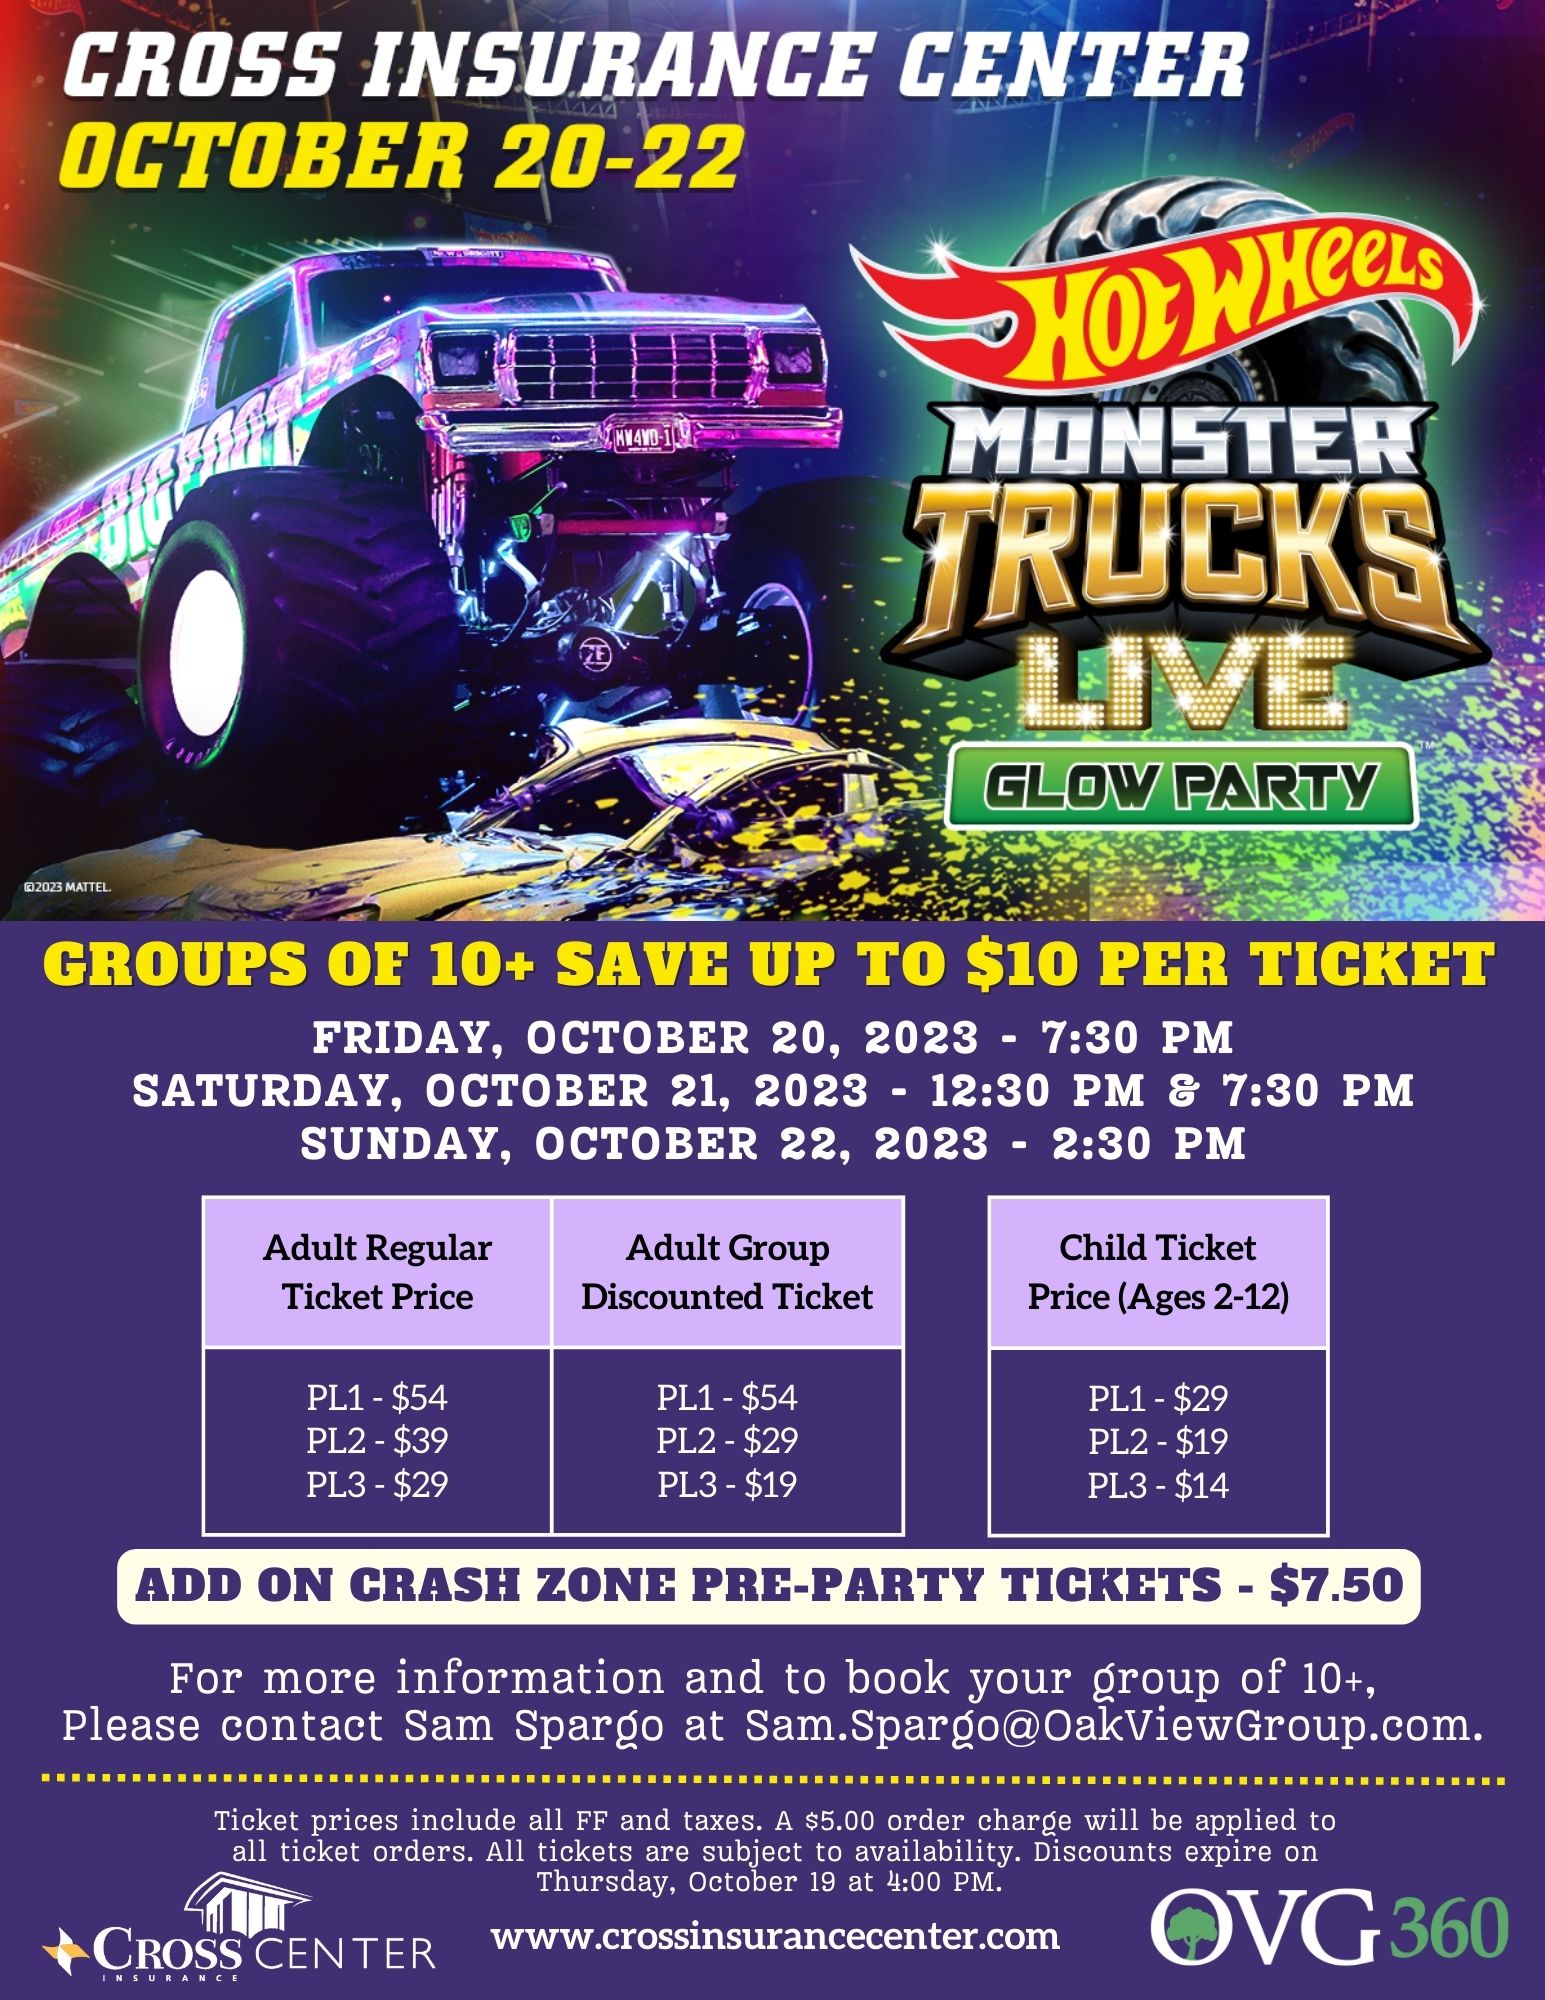 Hot Wheels Monster Trucks Live Glow Party Cross Insurance Center